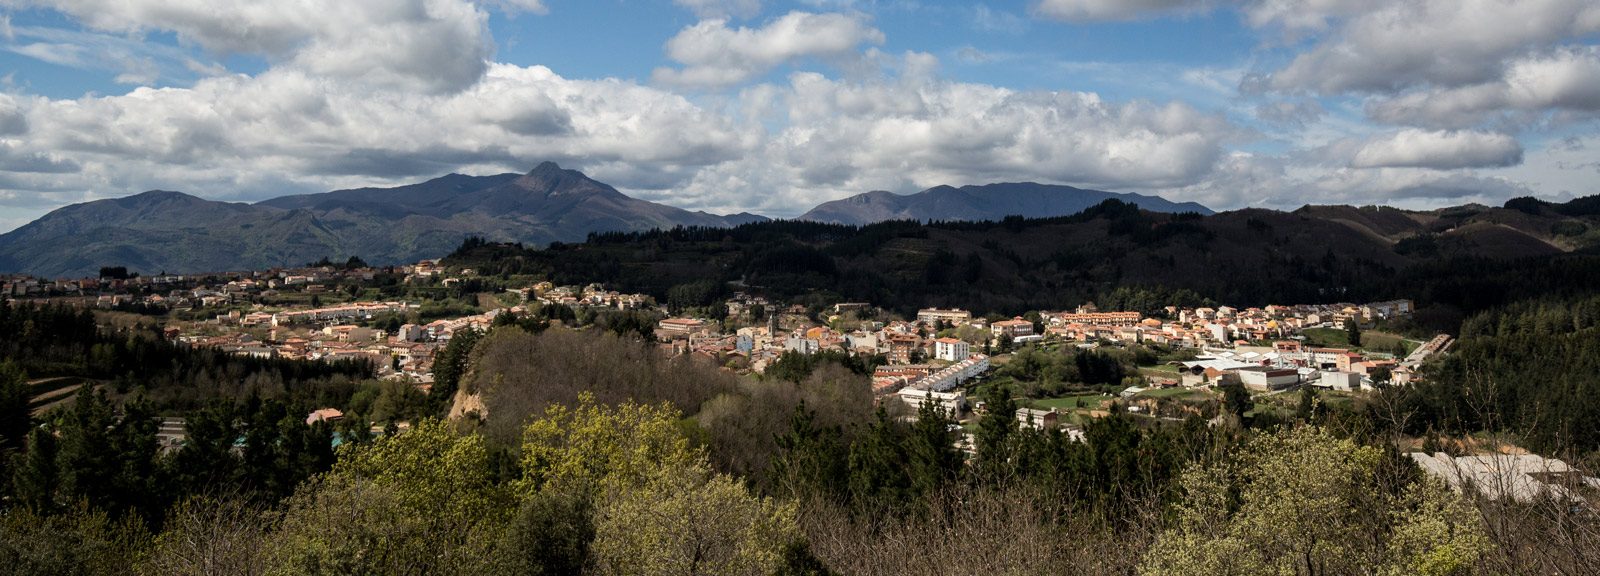 The municipality - Les Guilleries Km0 - Sant Hilari Sacalm